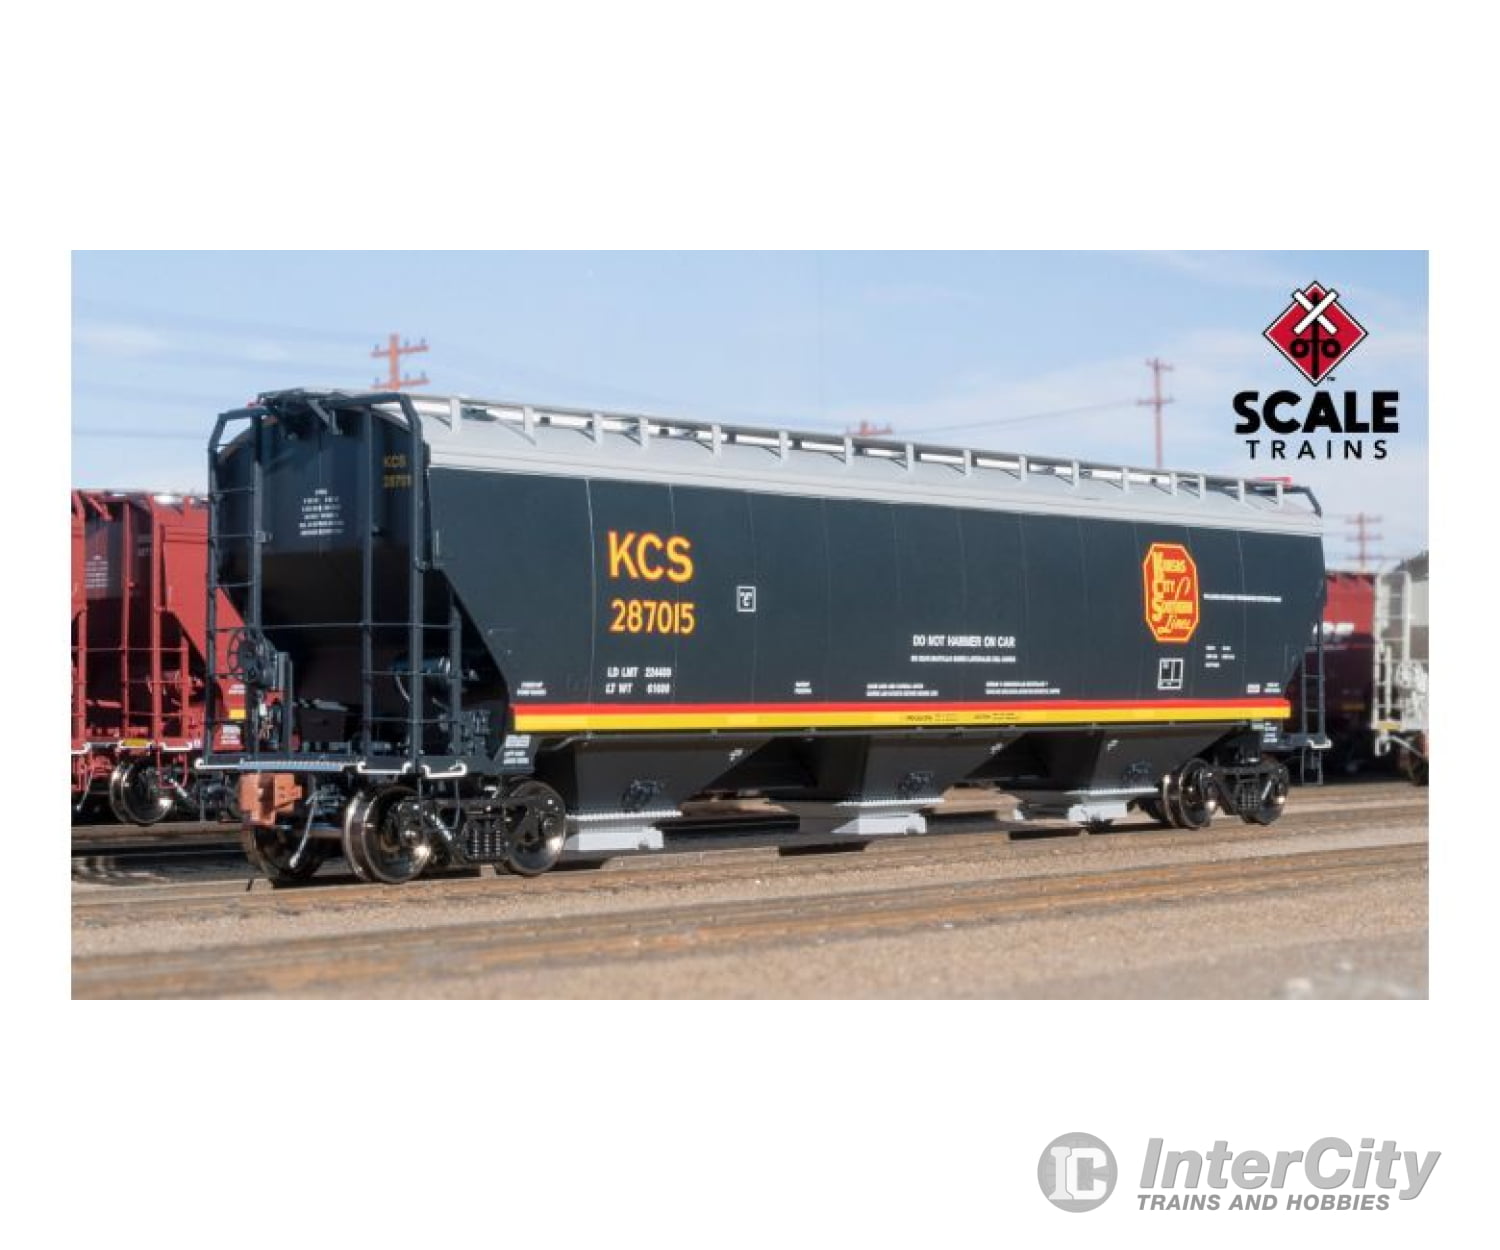 Scale Trains Sxt30822 Rivet Counter Ho Gunderson Covered Hopper Kansas City Southern - Belle Rd# Kcs